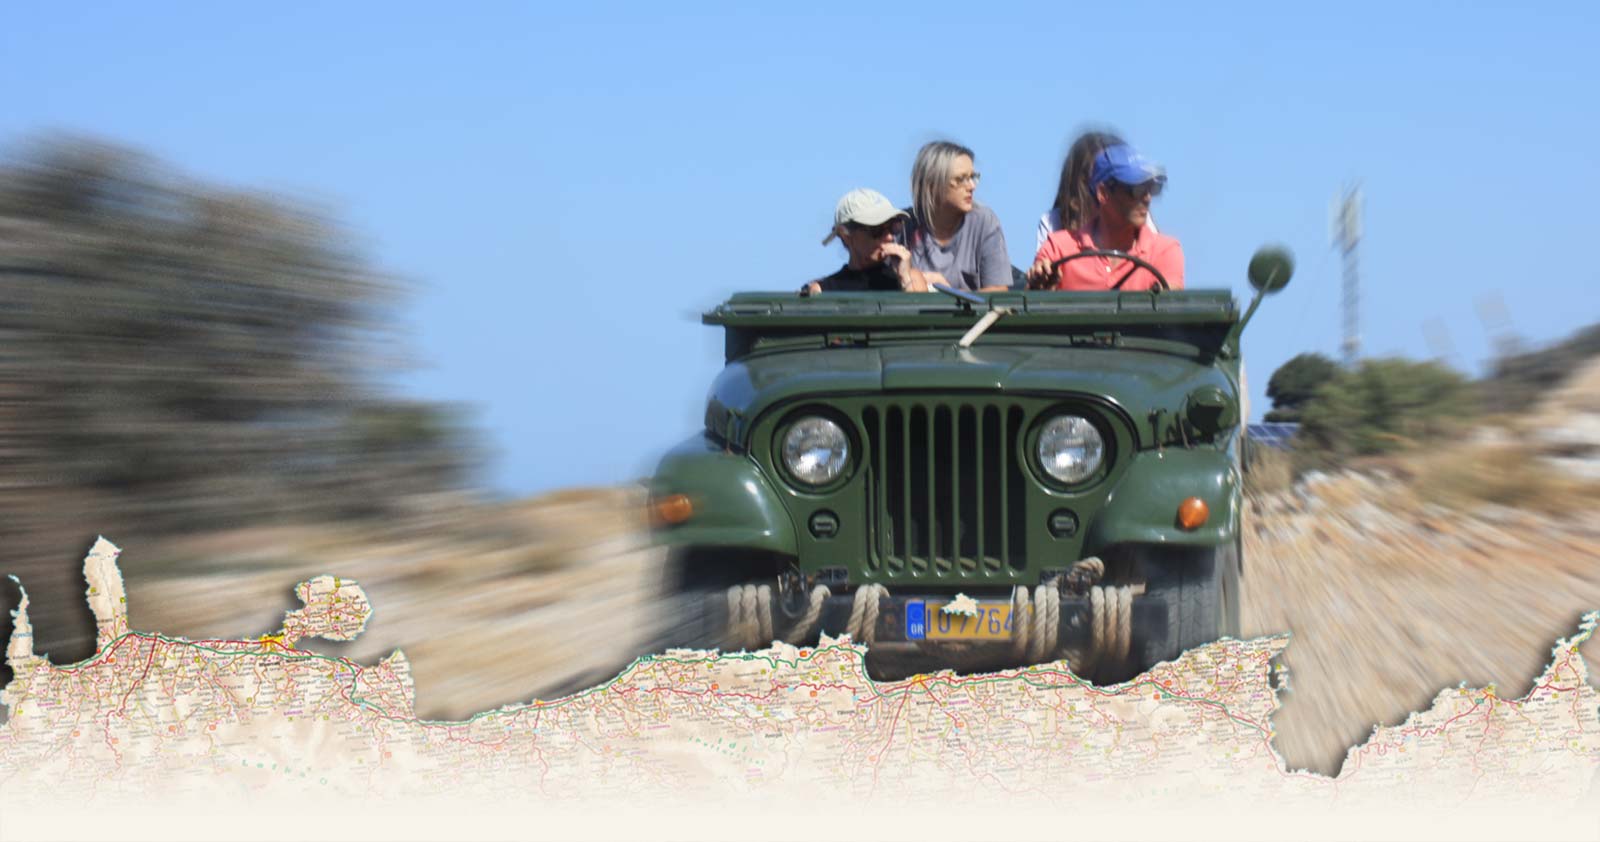 Willys adventure jeep safari day tours excursions crete greece